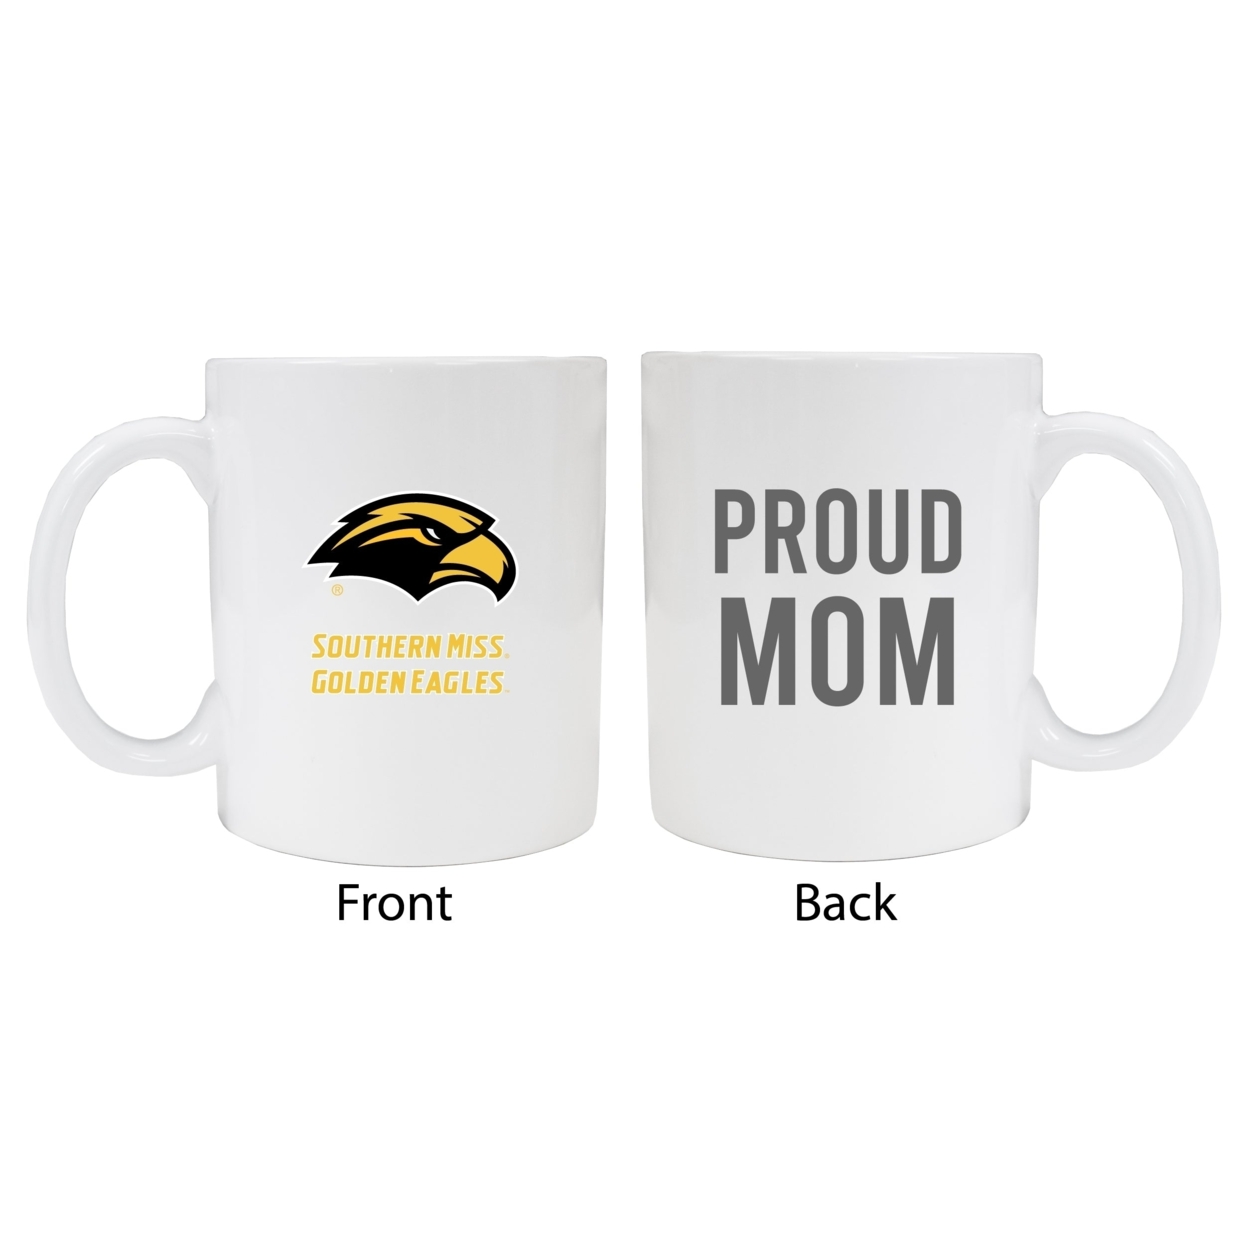 Southern Mississippi Golden Eagles Proud Mom Ceramic Coffee Mug - White (2 Pack)